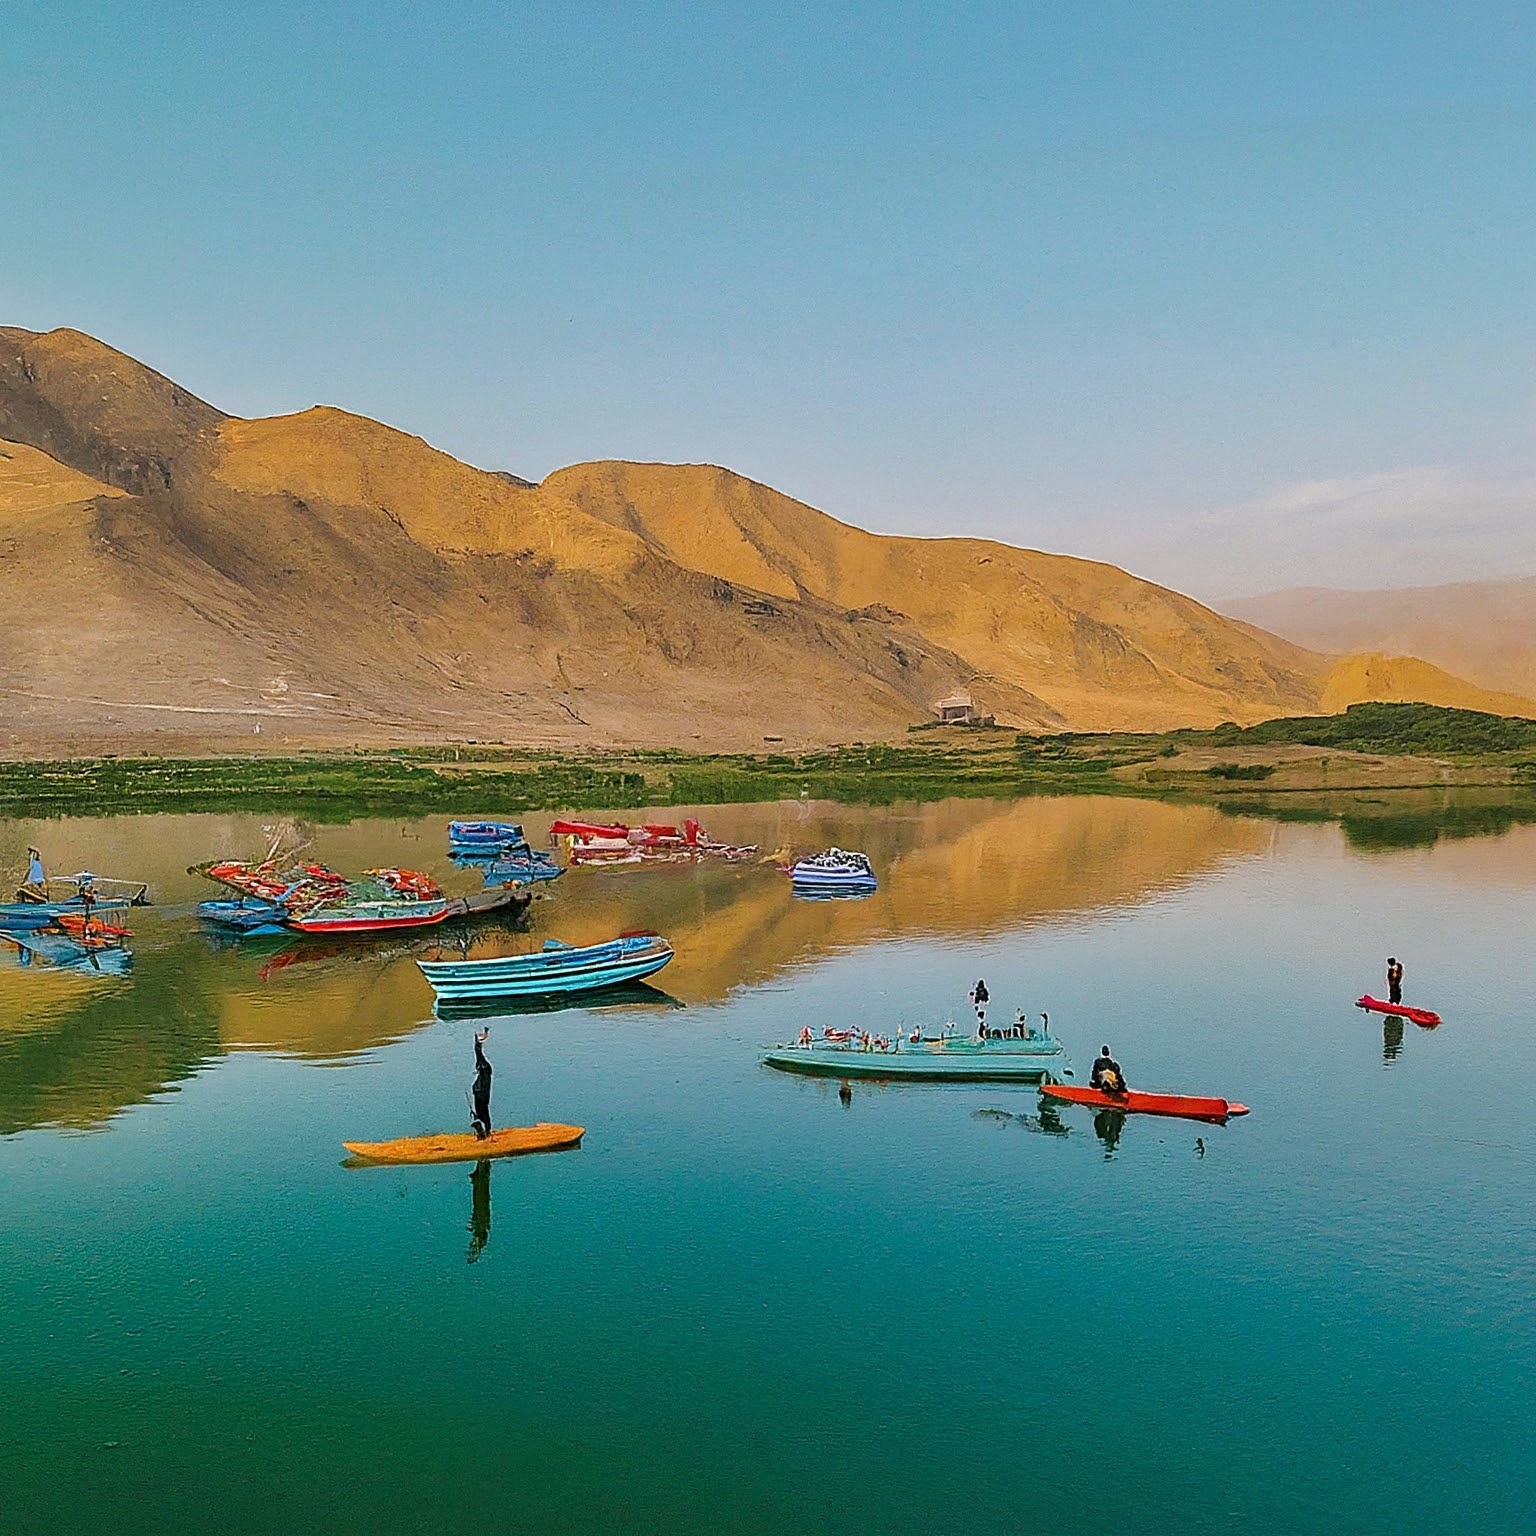 Lar Lake, Iran, with colorful boats, people kayaking and enjoying water activities.